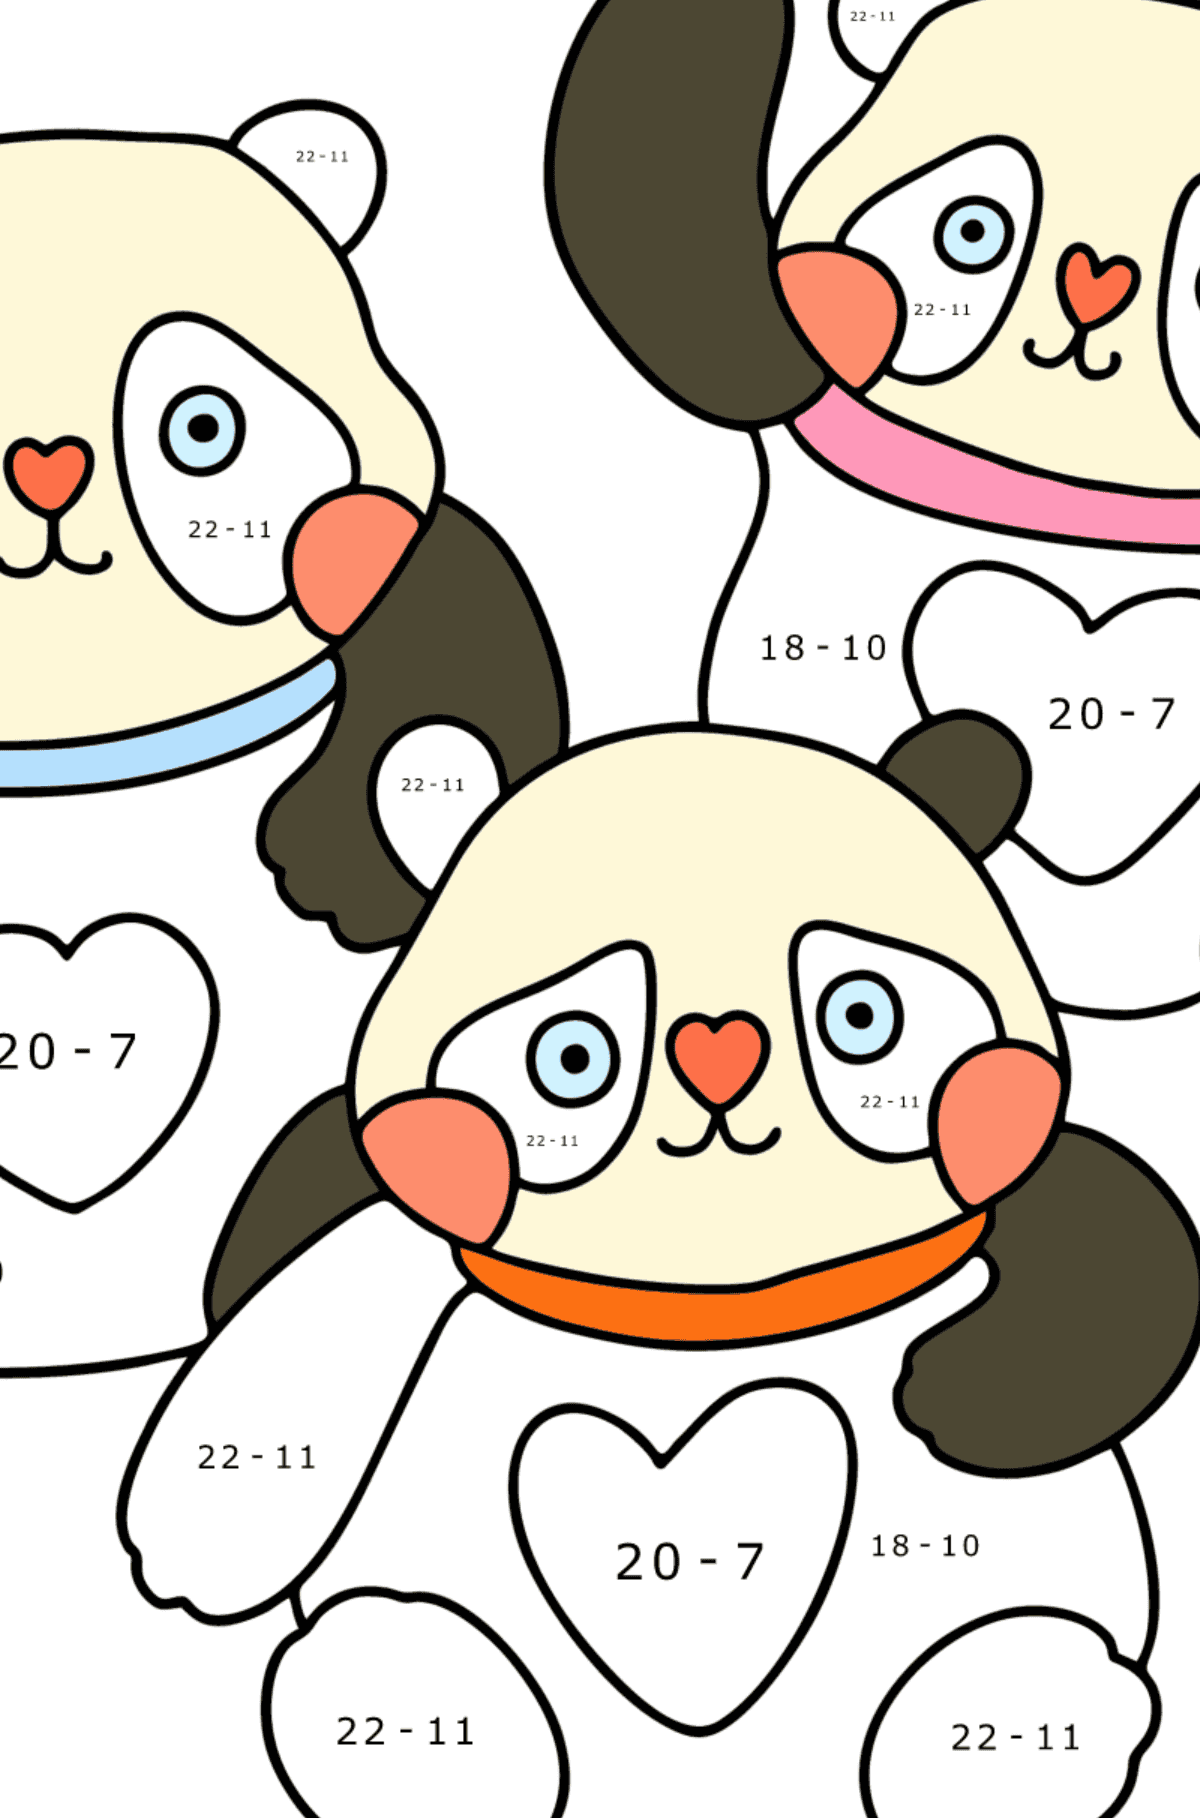 Kawaii pandas coloring page - Math Coloring - Subtraction for Kids